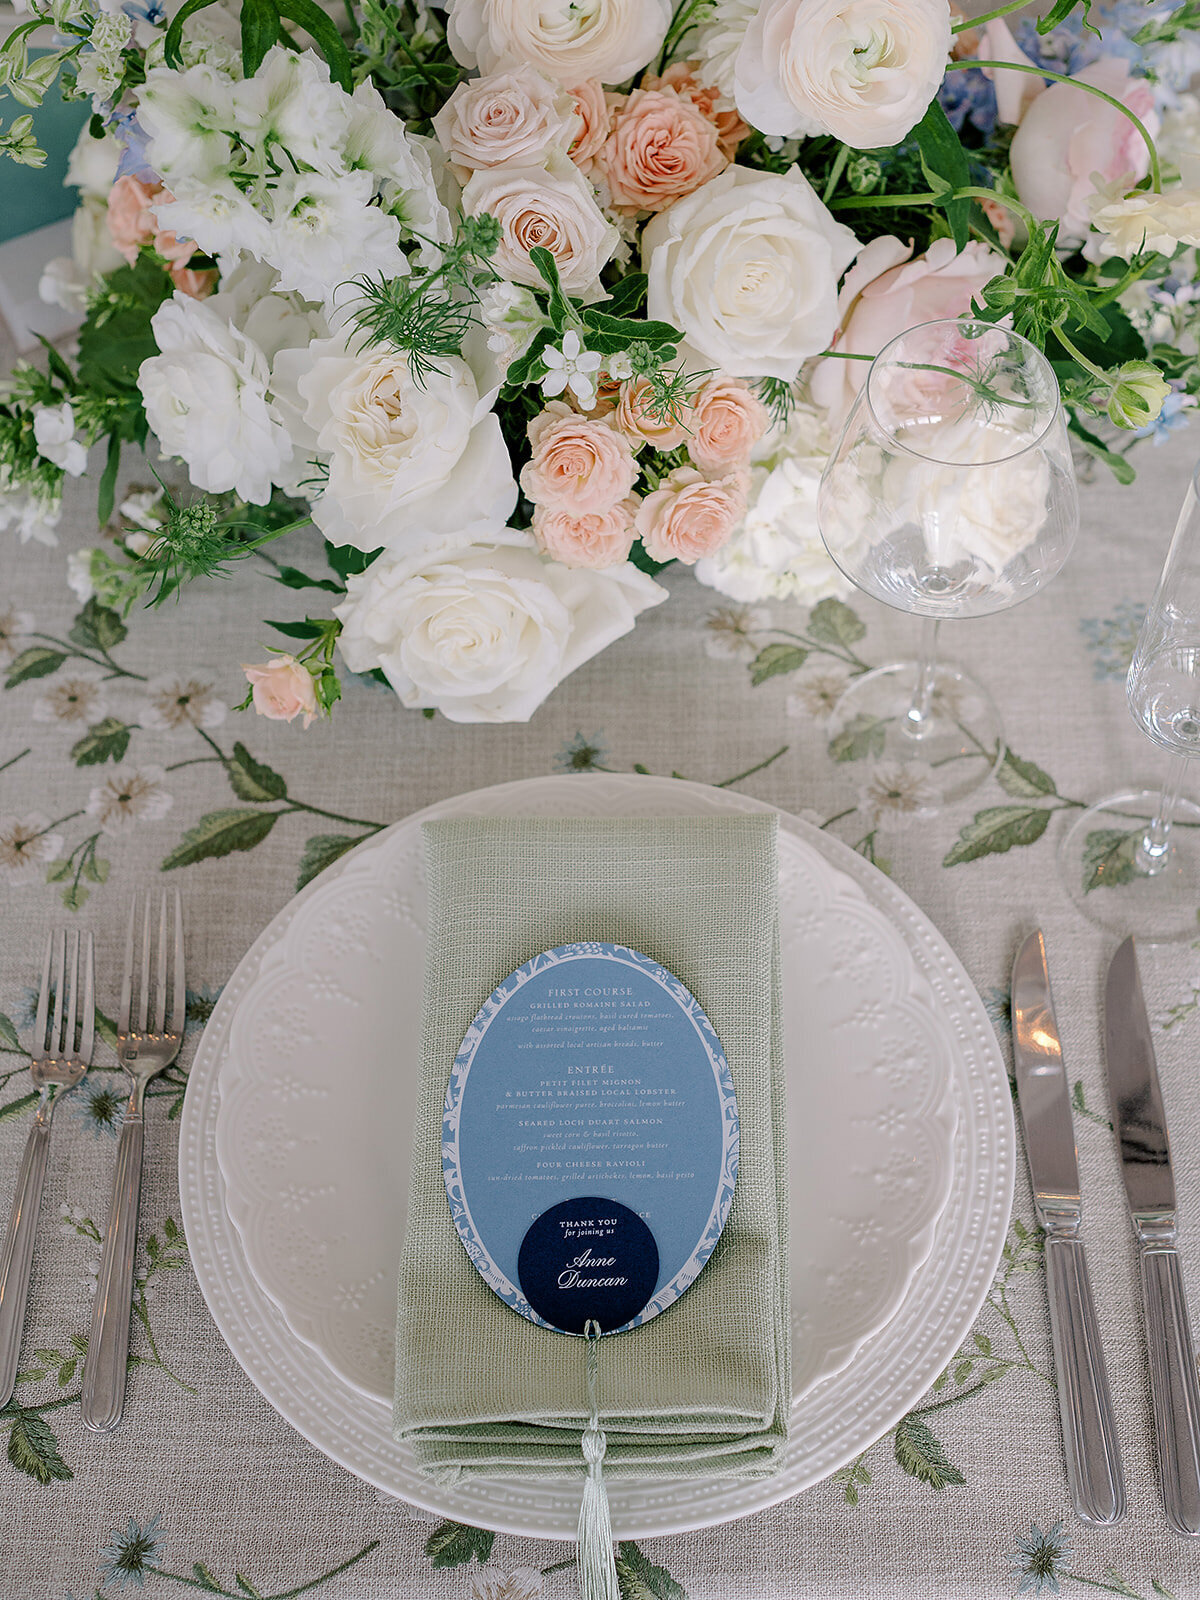 Kate_Murtaugh_Events_Cape_Cod_wedding_planner_reception_place_setting